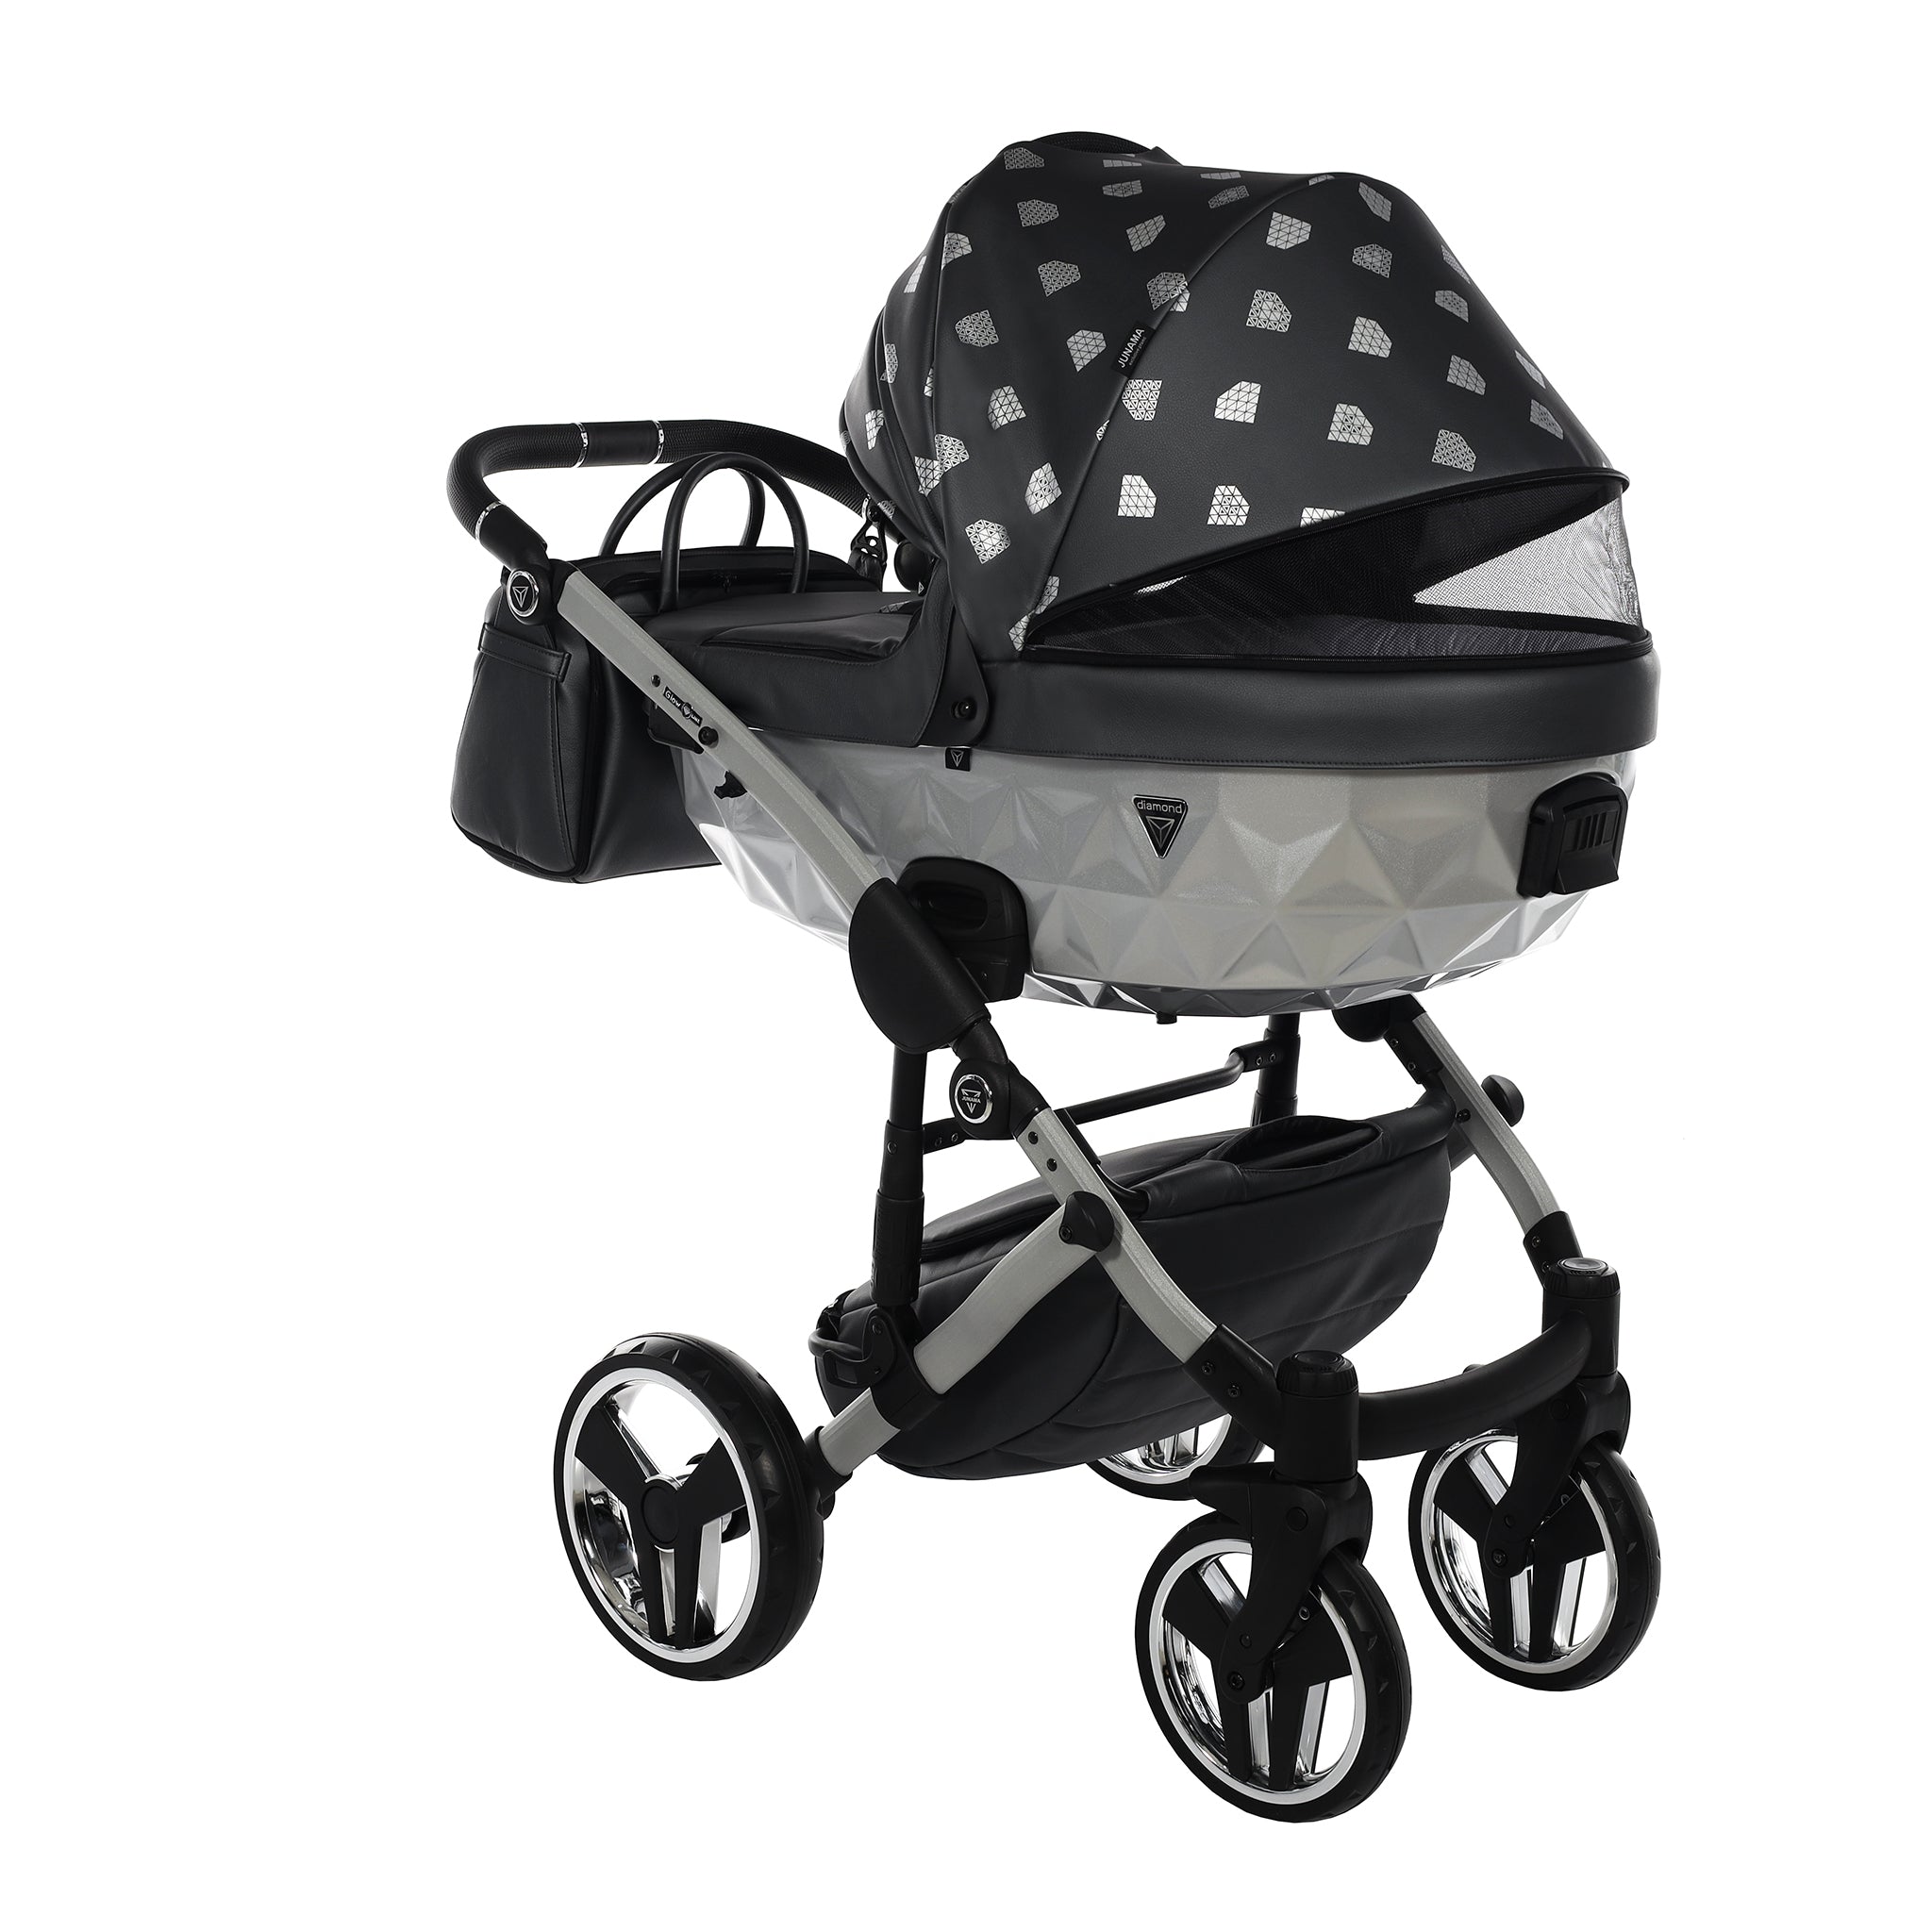 Junama GLOW, baby prams or stroller 2 in 1 - Silver and Black, Code number: JUNGLW04